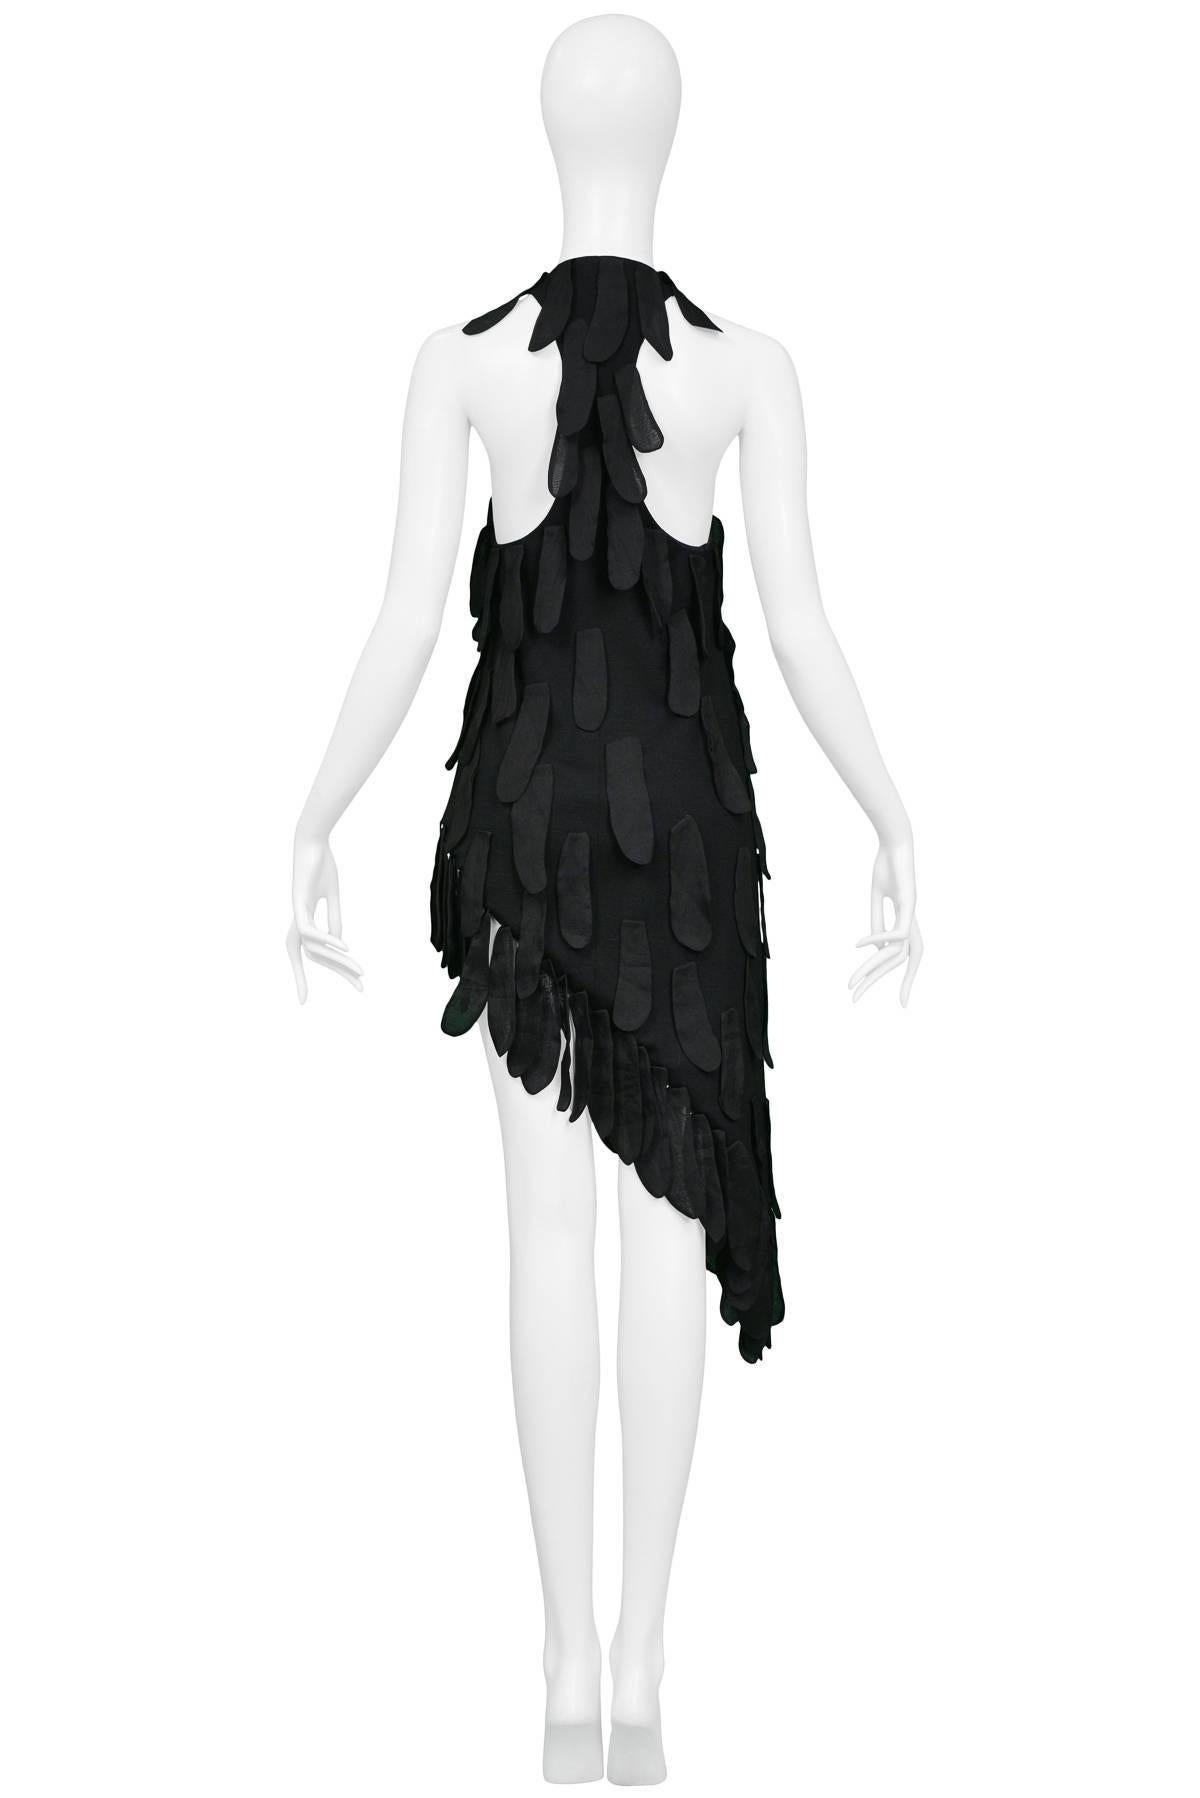 Women's Museum Worthy Vintage Stephen Sprouse Asymmetrical Black Tab Dress 1980's 